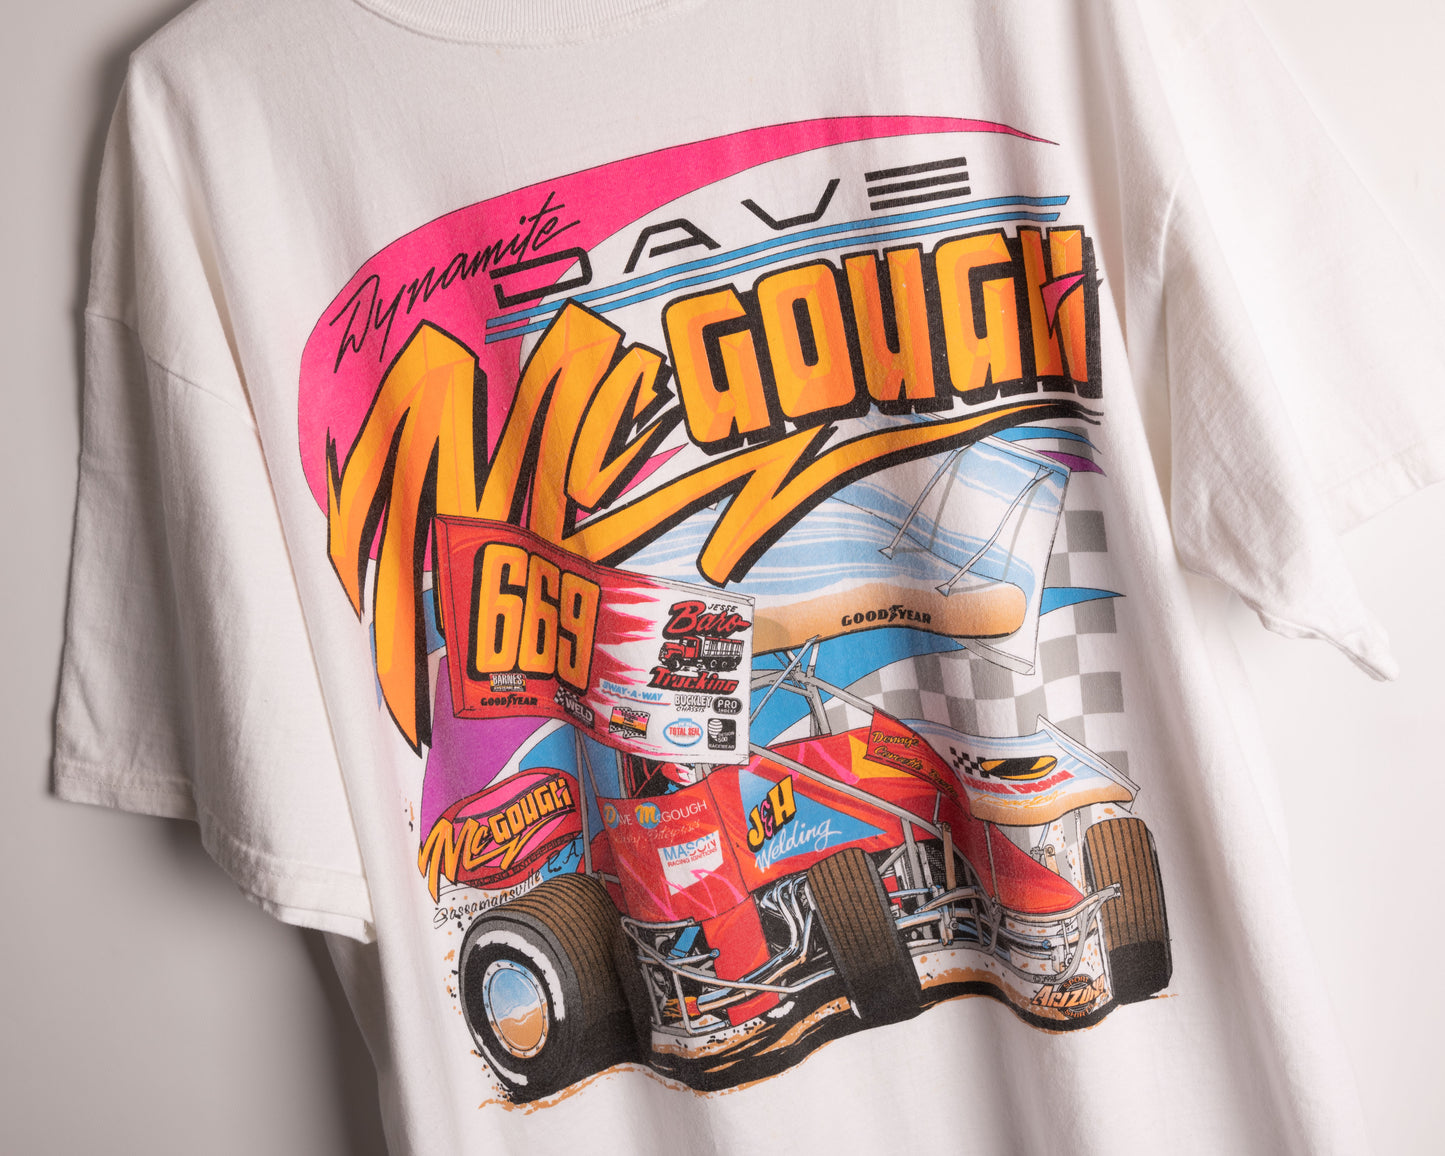 'Dynamite' Dave McGough racing t-shirt